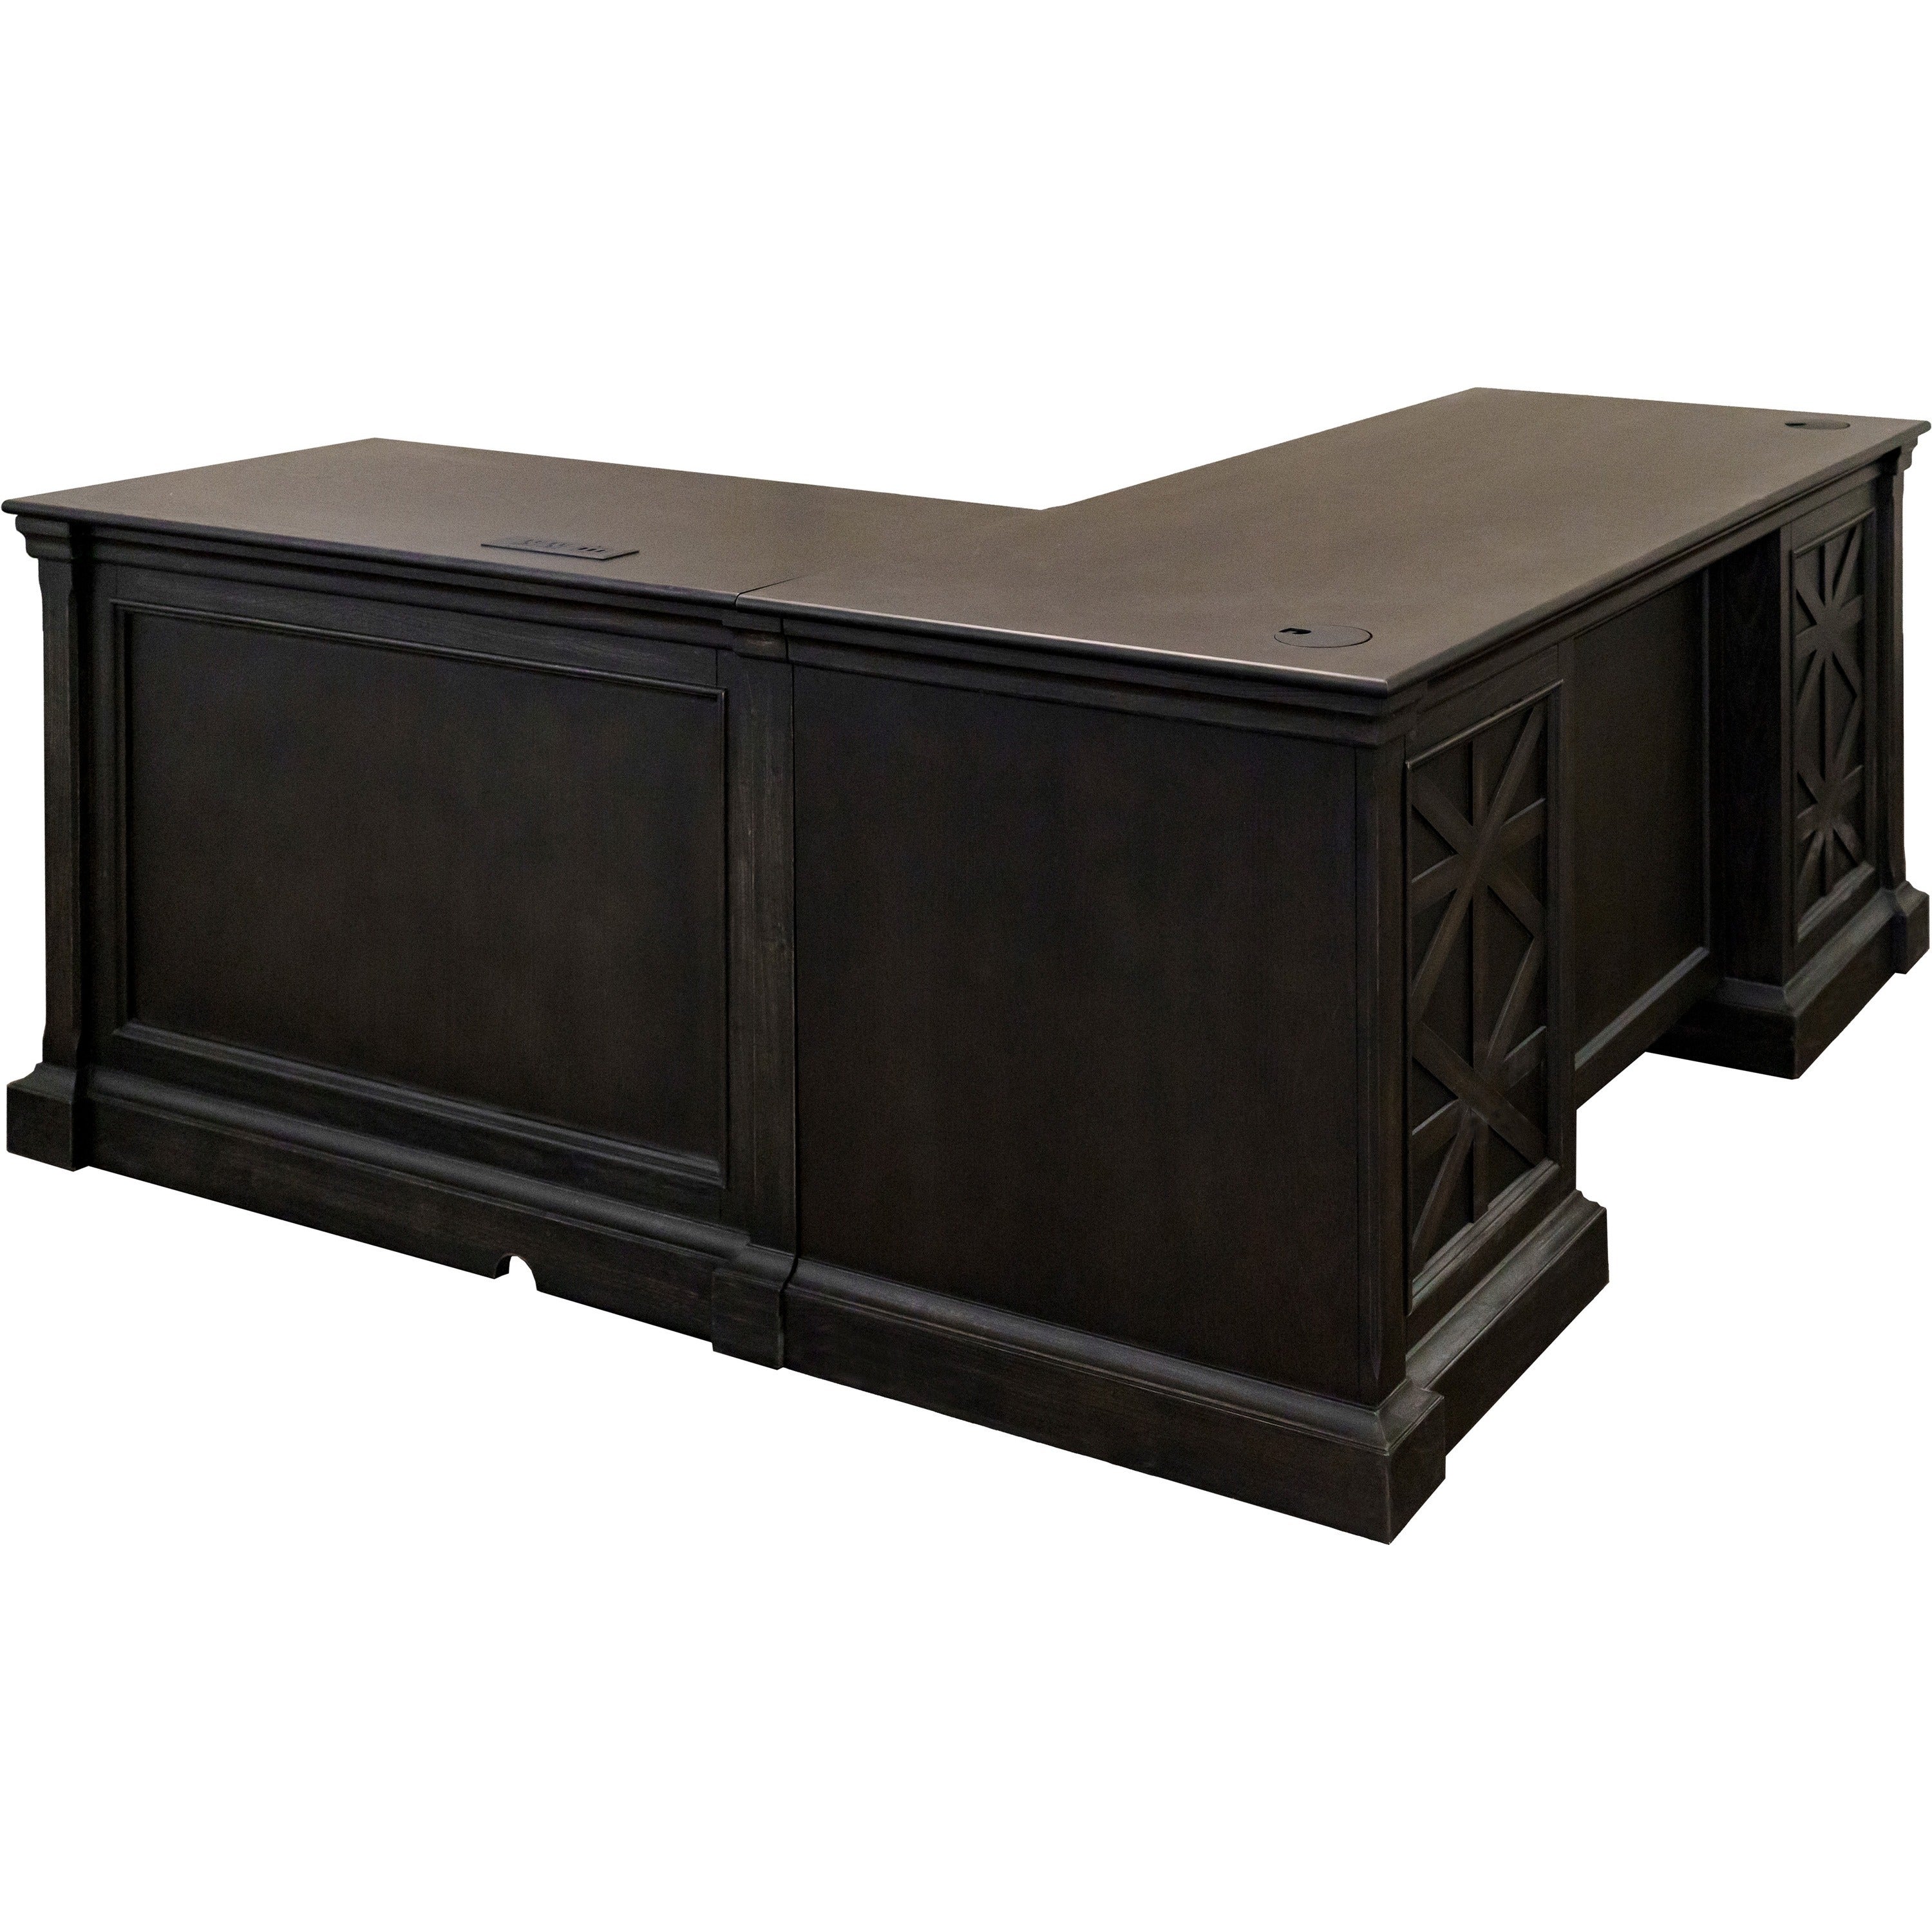 martin-kingston-desk-with-pedestal-box-1-of-2-66-x-3030-4-x-utility-file-drawers-material-wood-finish-dark-chocolate-rub-through_mrtimkn684r - 4